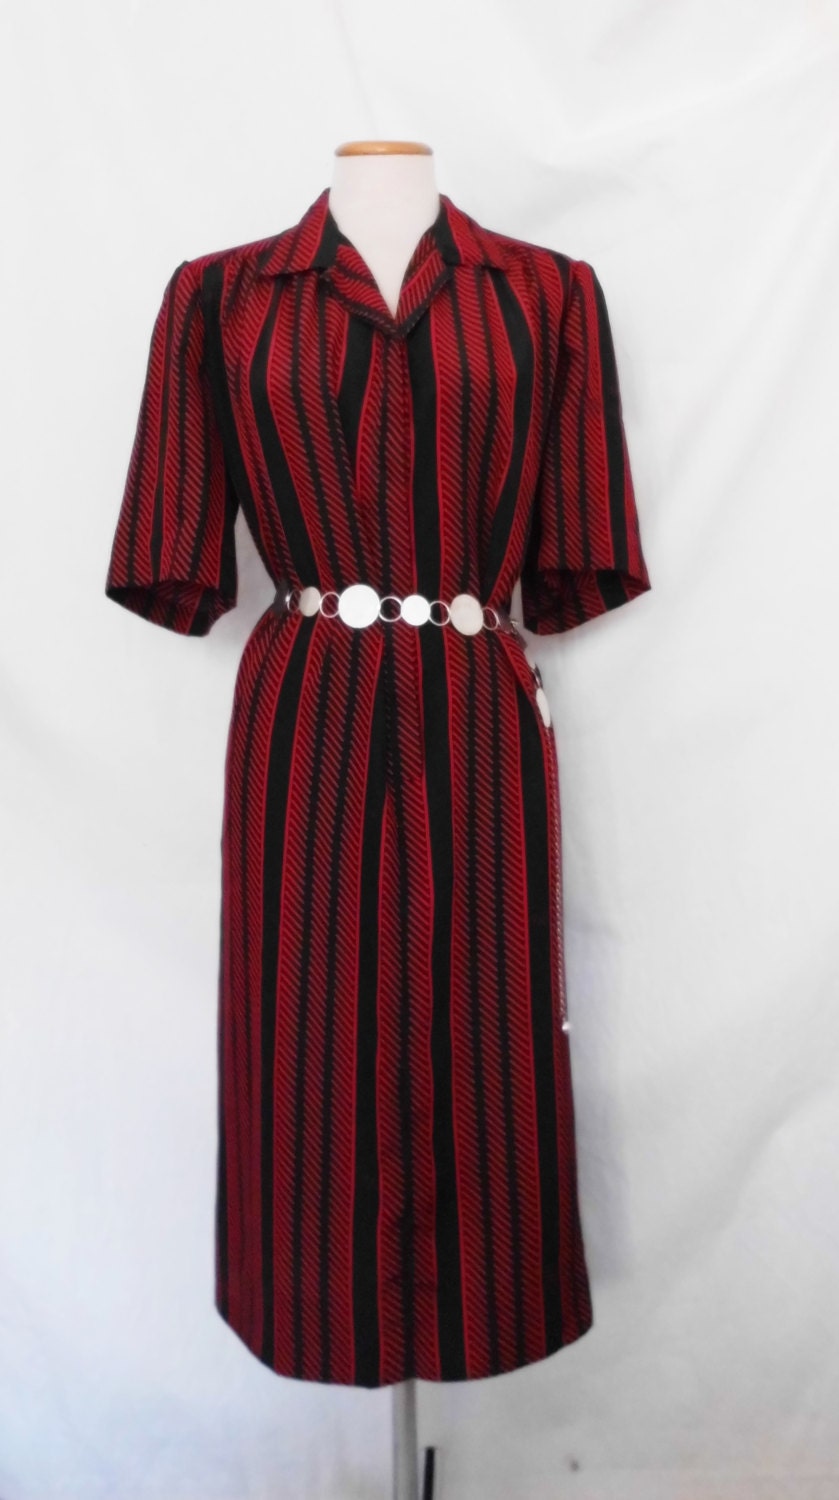 SALE: Vintage Shirtwaist Dress Red & Black by LAndrominaPerfecta